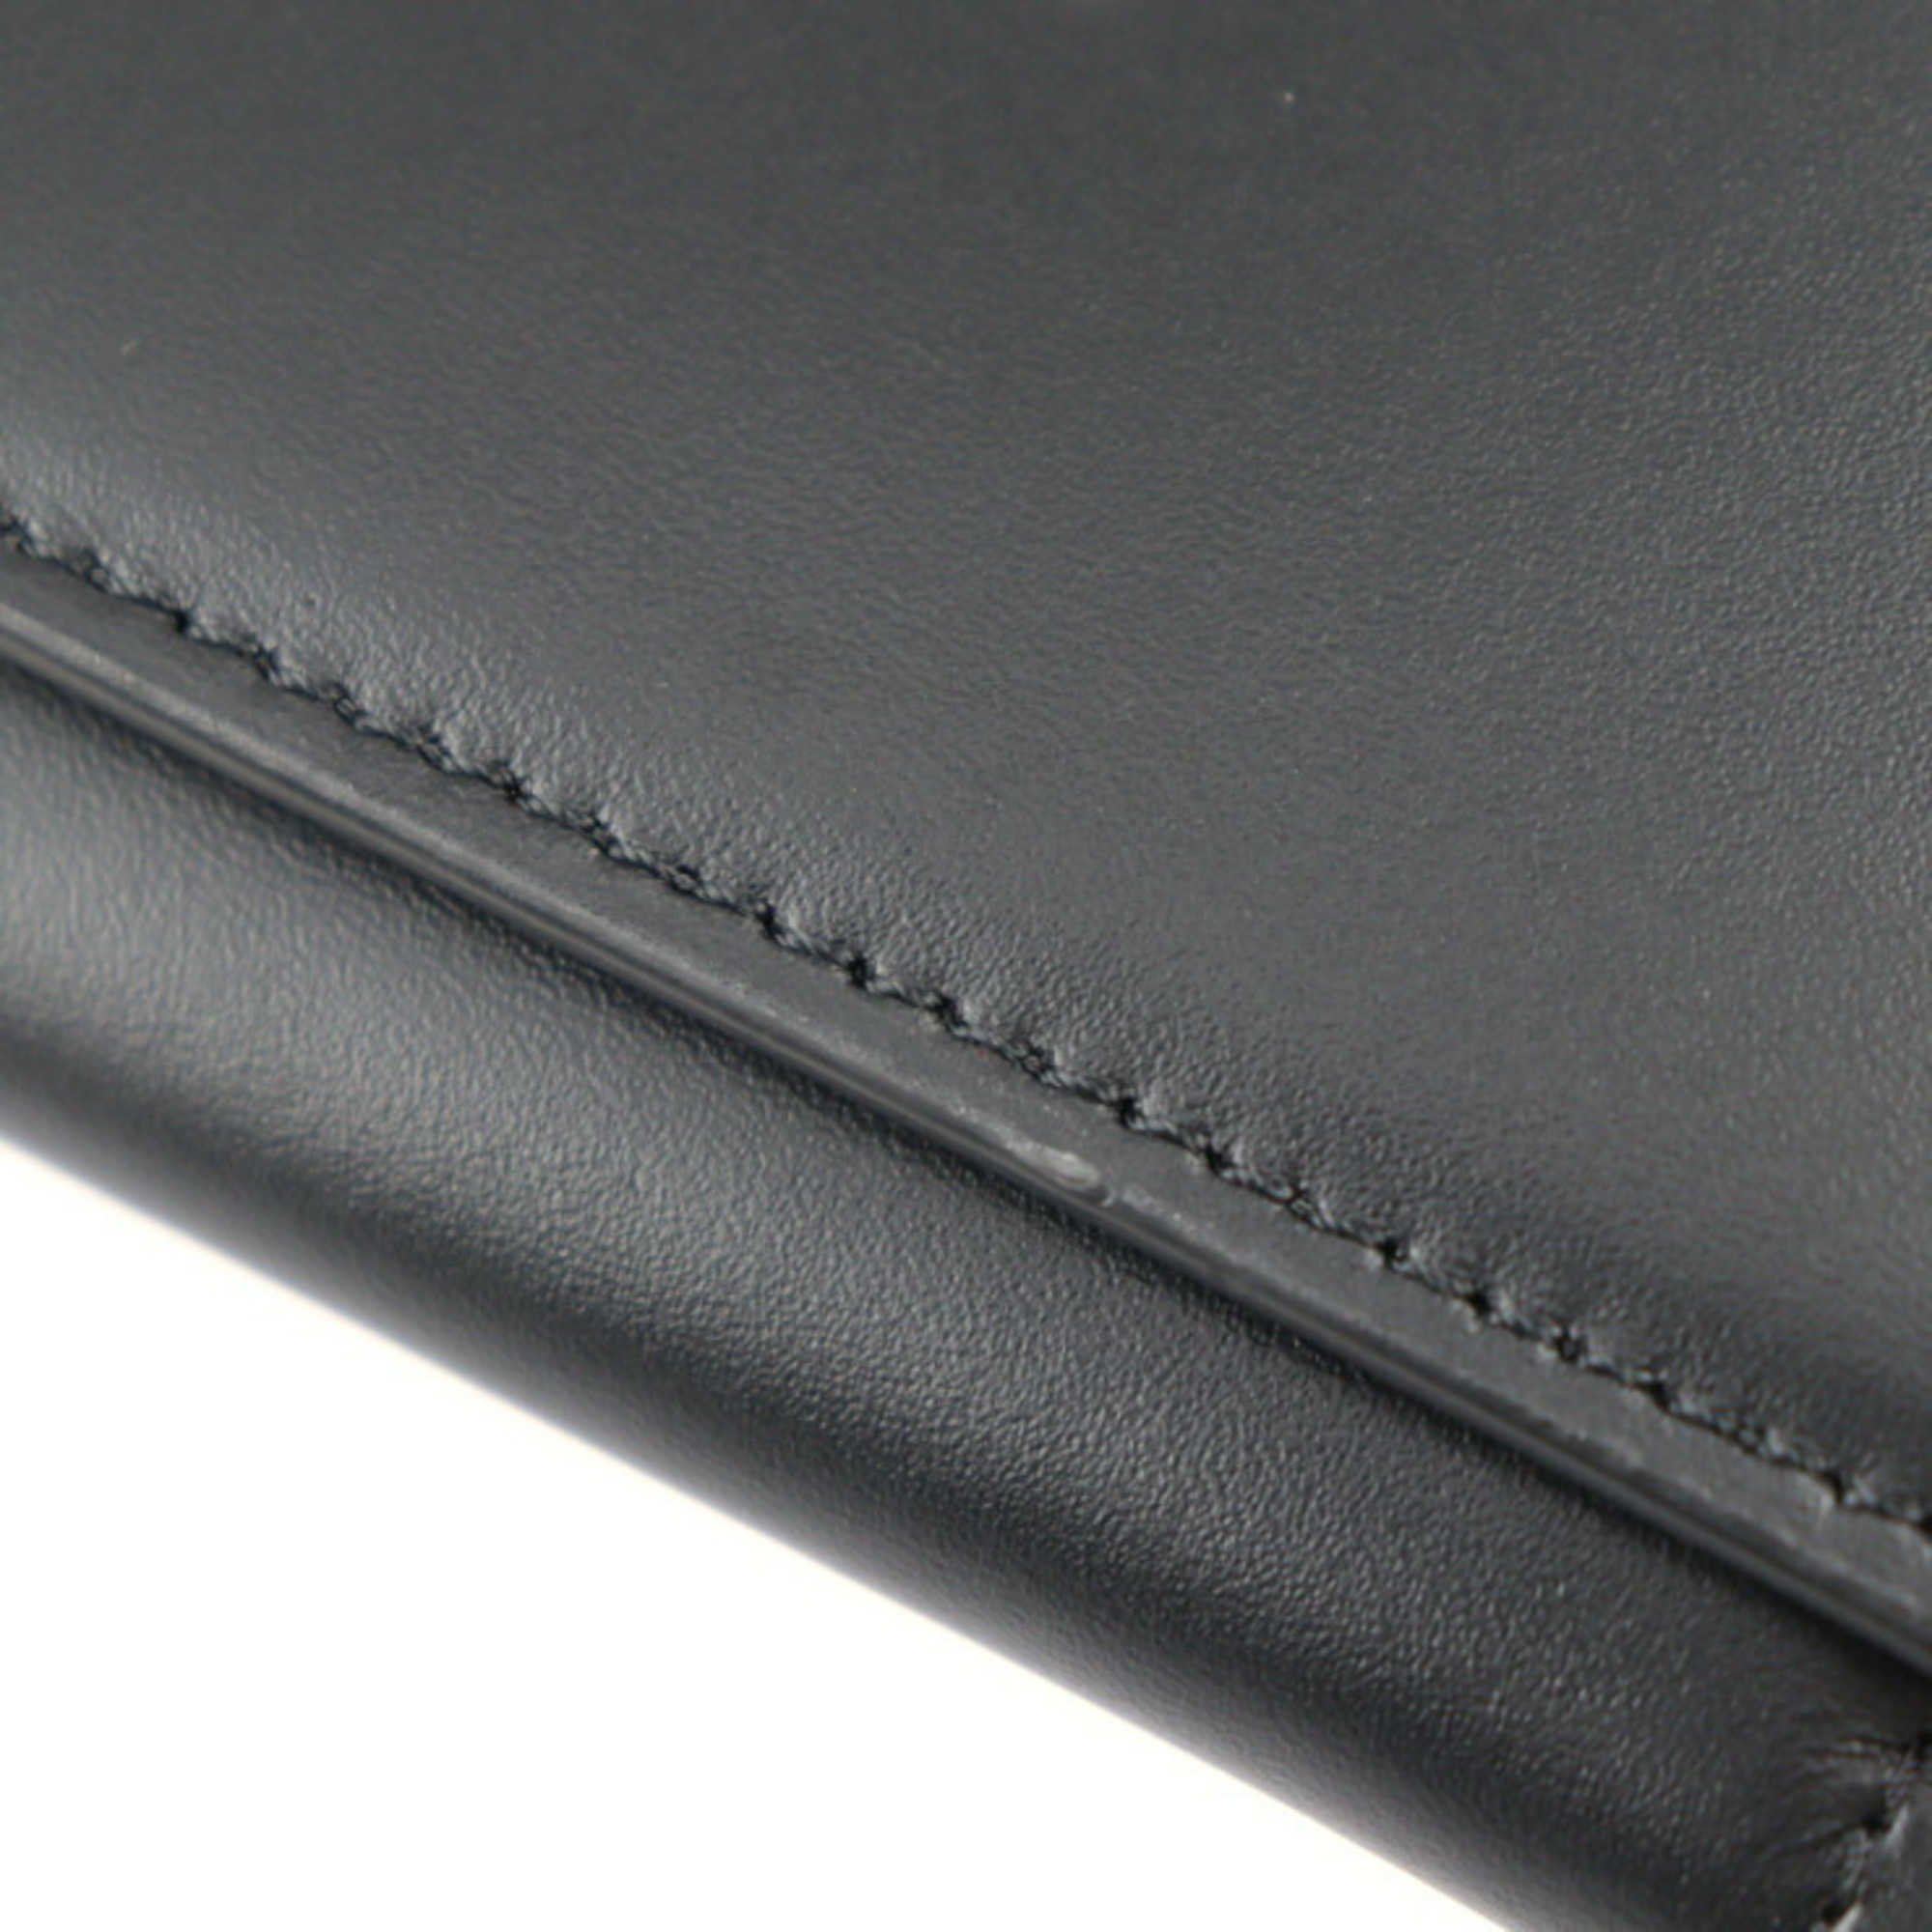 FENDI Continental Wallet Long 7M0264 Calf Leather Black Silver Hardware Logo